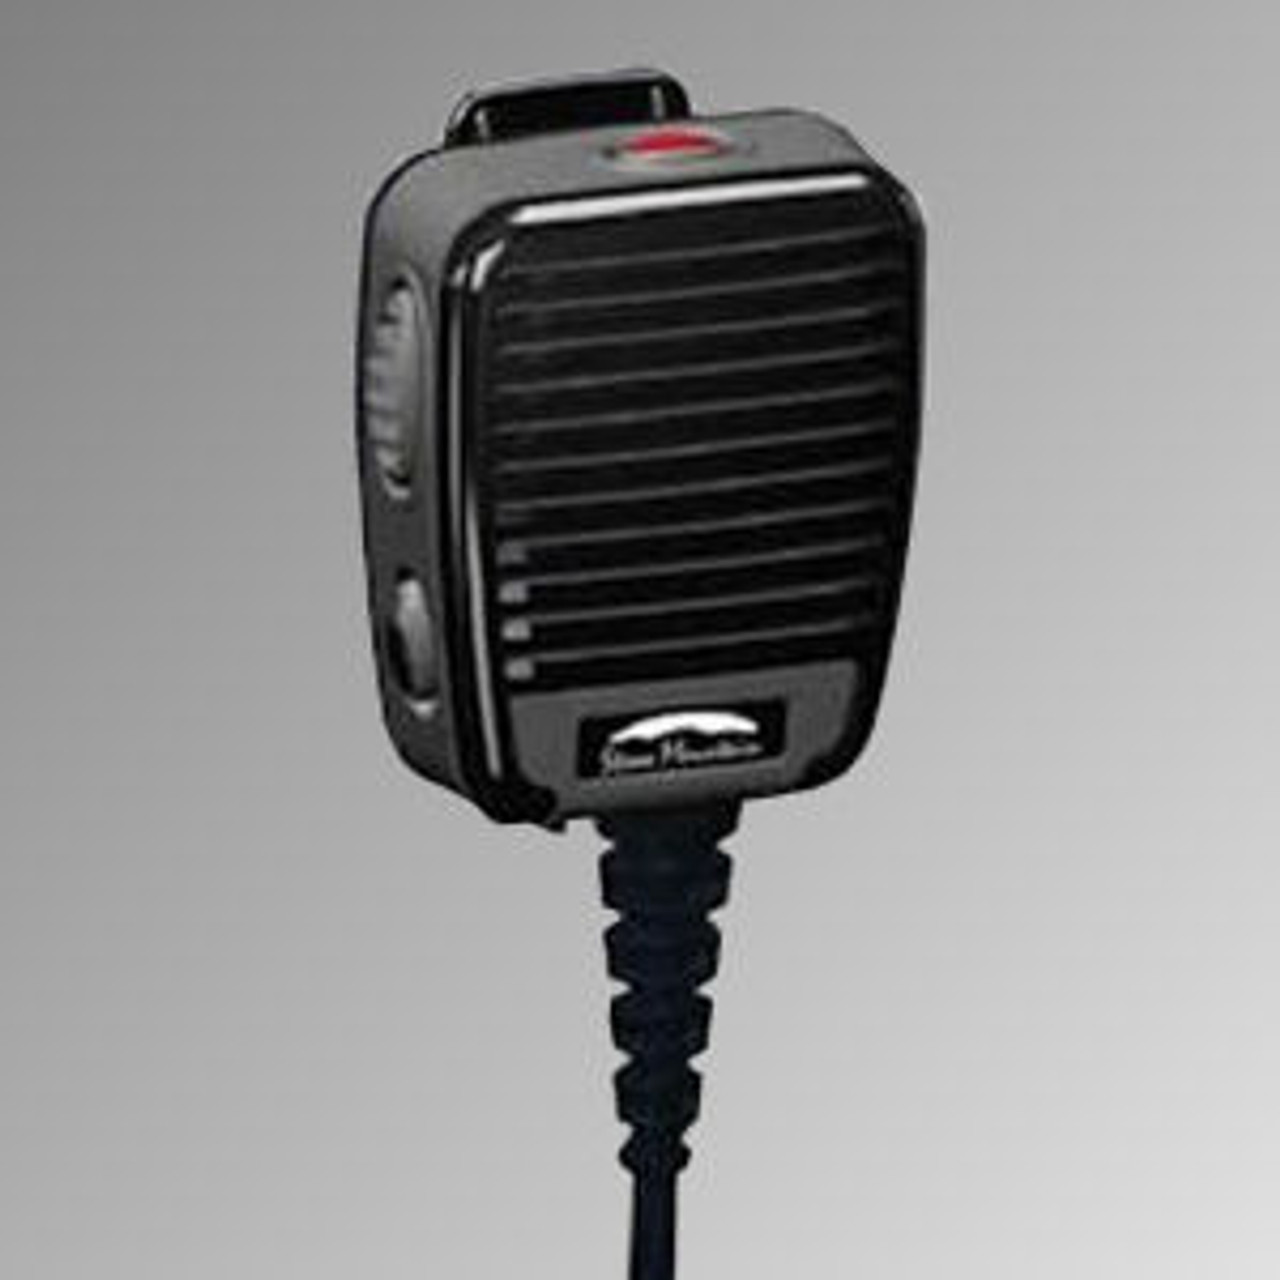 Harris P7350 Noise Canceling Ruggedized Waterproof IP68 High Volume Speaker Mic